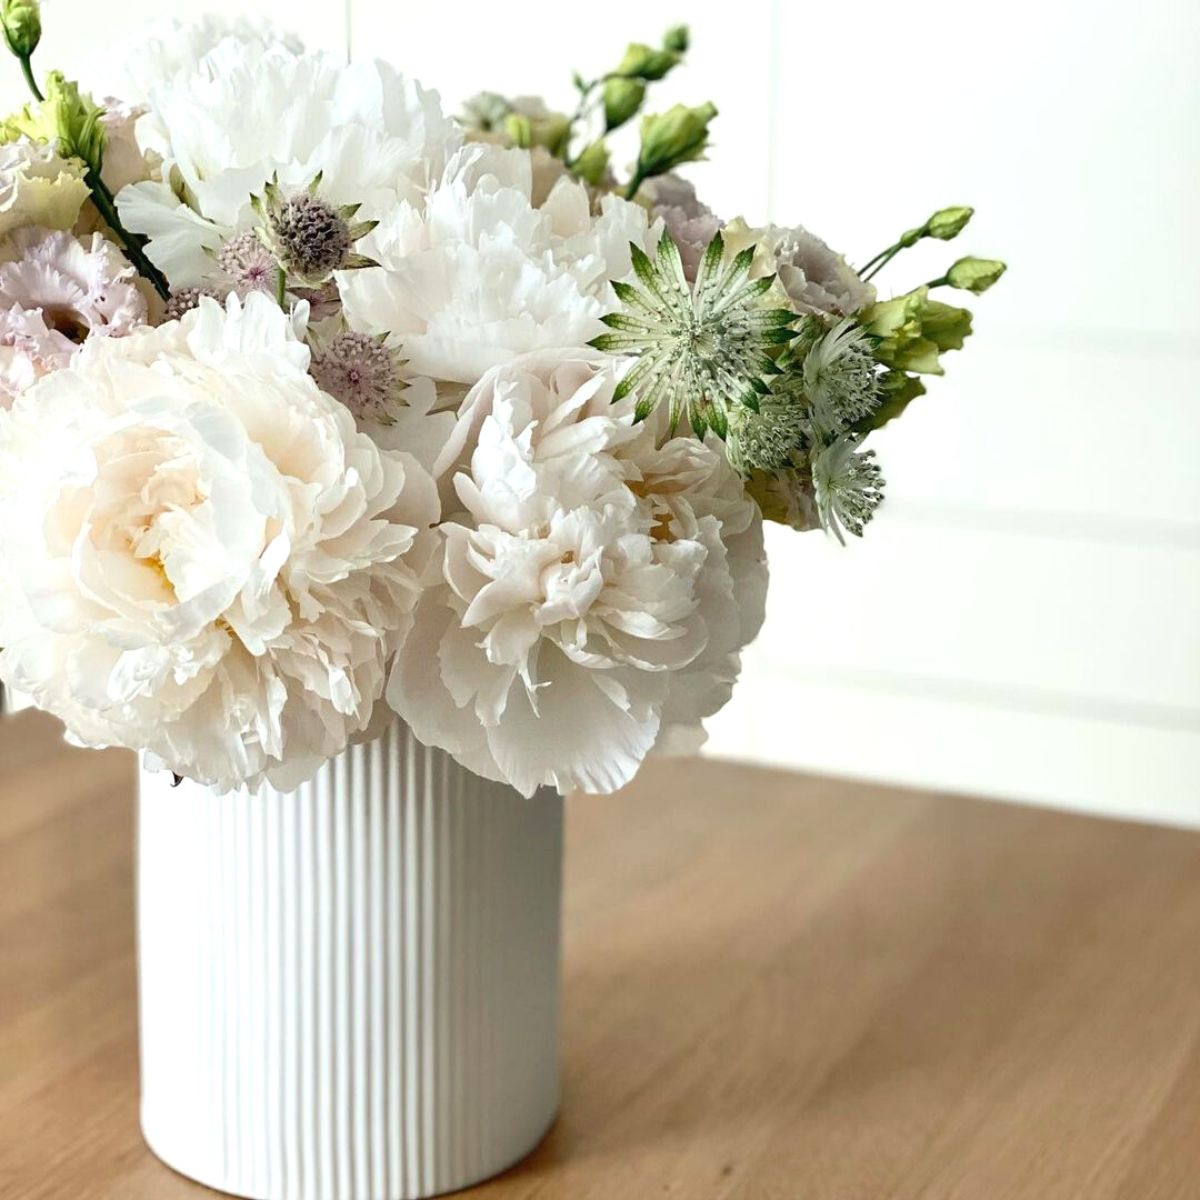 White flowers in an arrangement